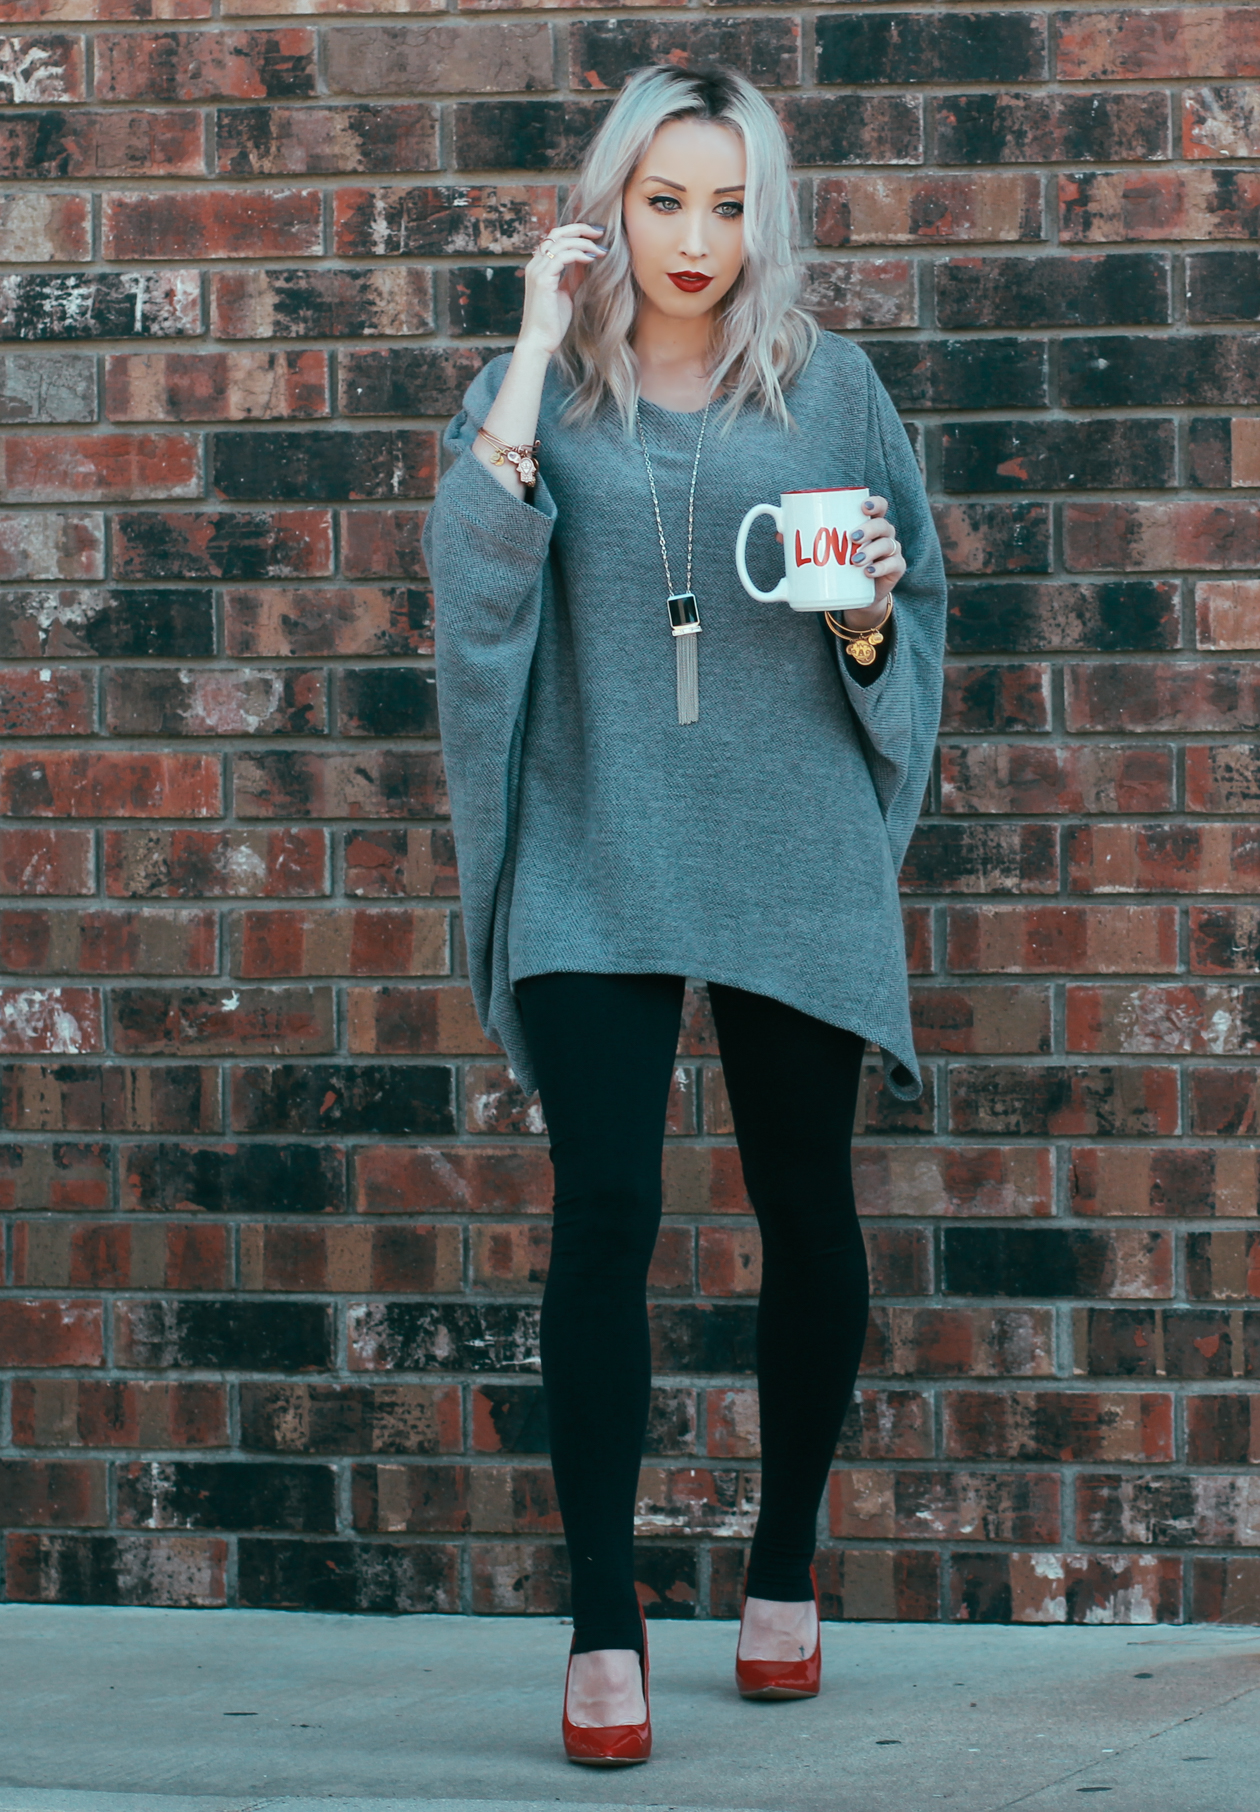 "Nutella & Netflix" Mug from @acupofquotes | BlondieintheCity.com